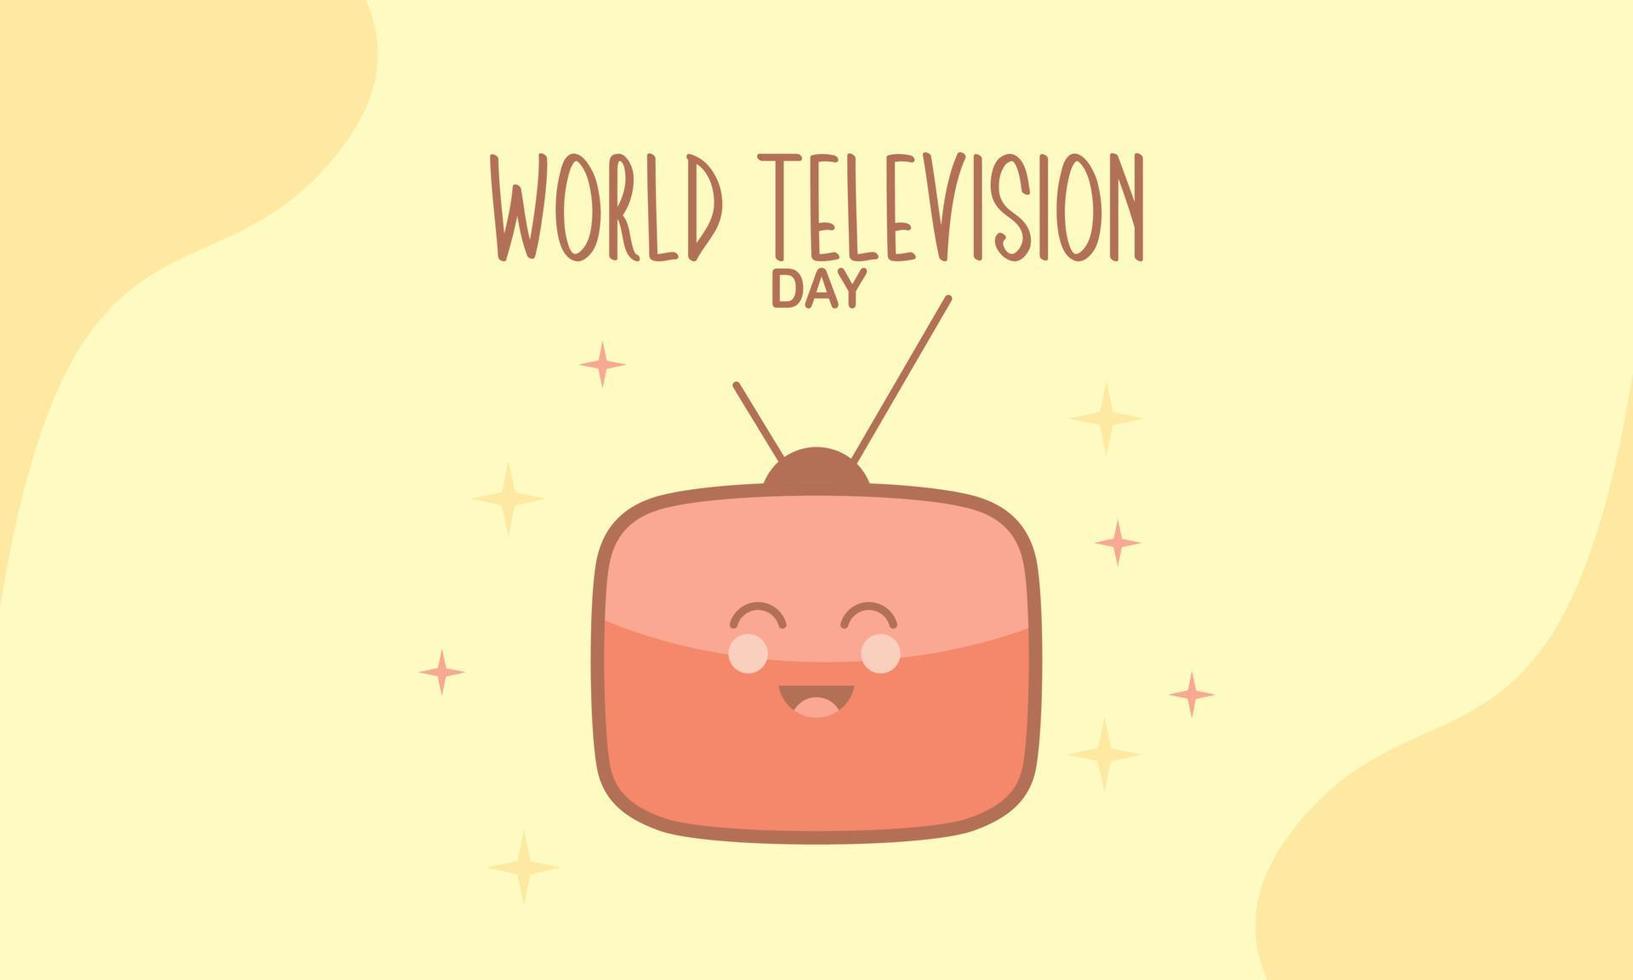 Vintage ▾ televisione cartone animato illustrazione. mondo televisione giorno illustrazione vettore